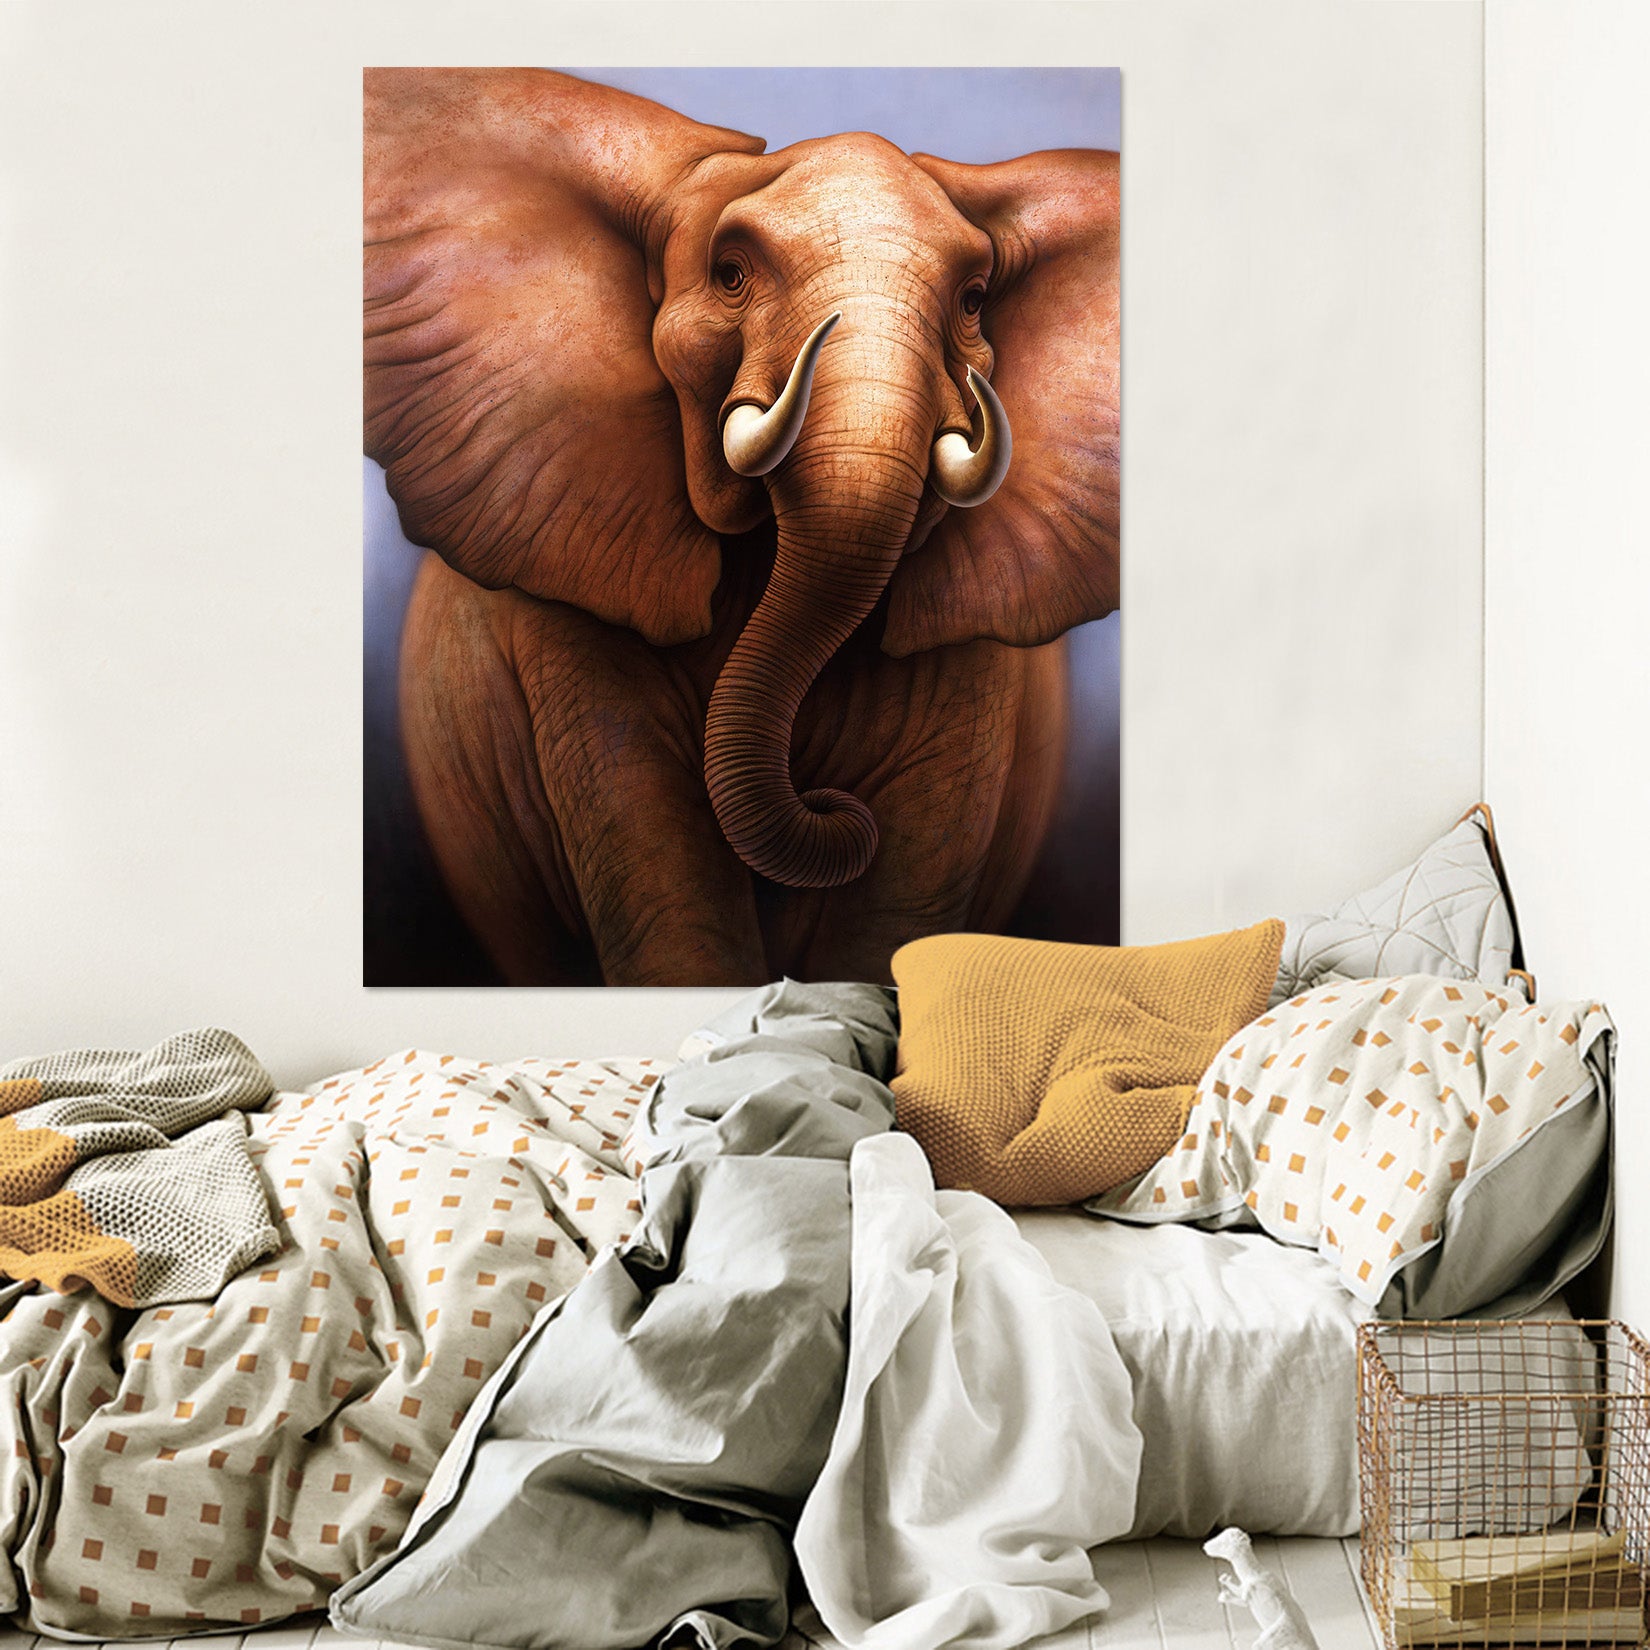 3D Elephant 033 Jerry LoFaro Wall Sticker